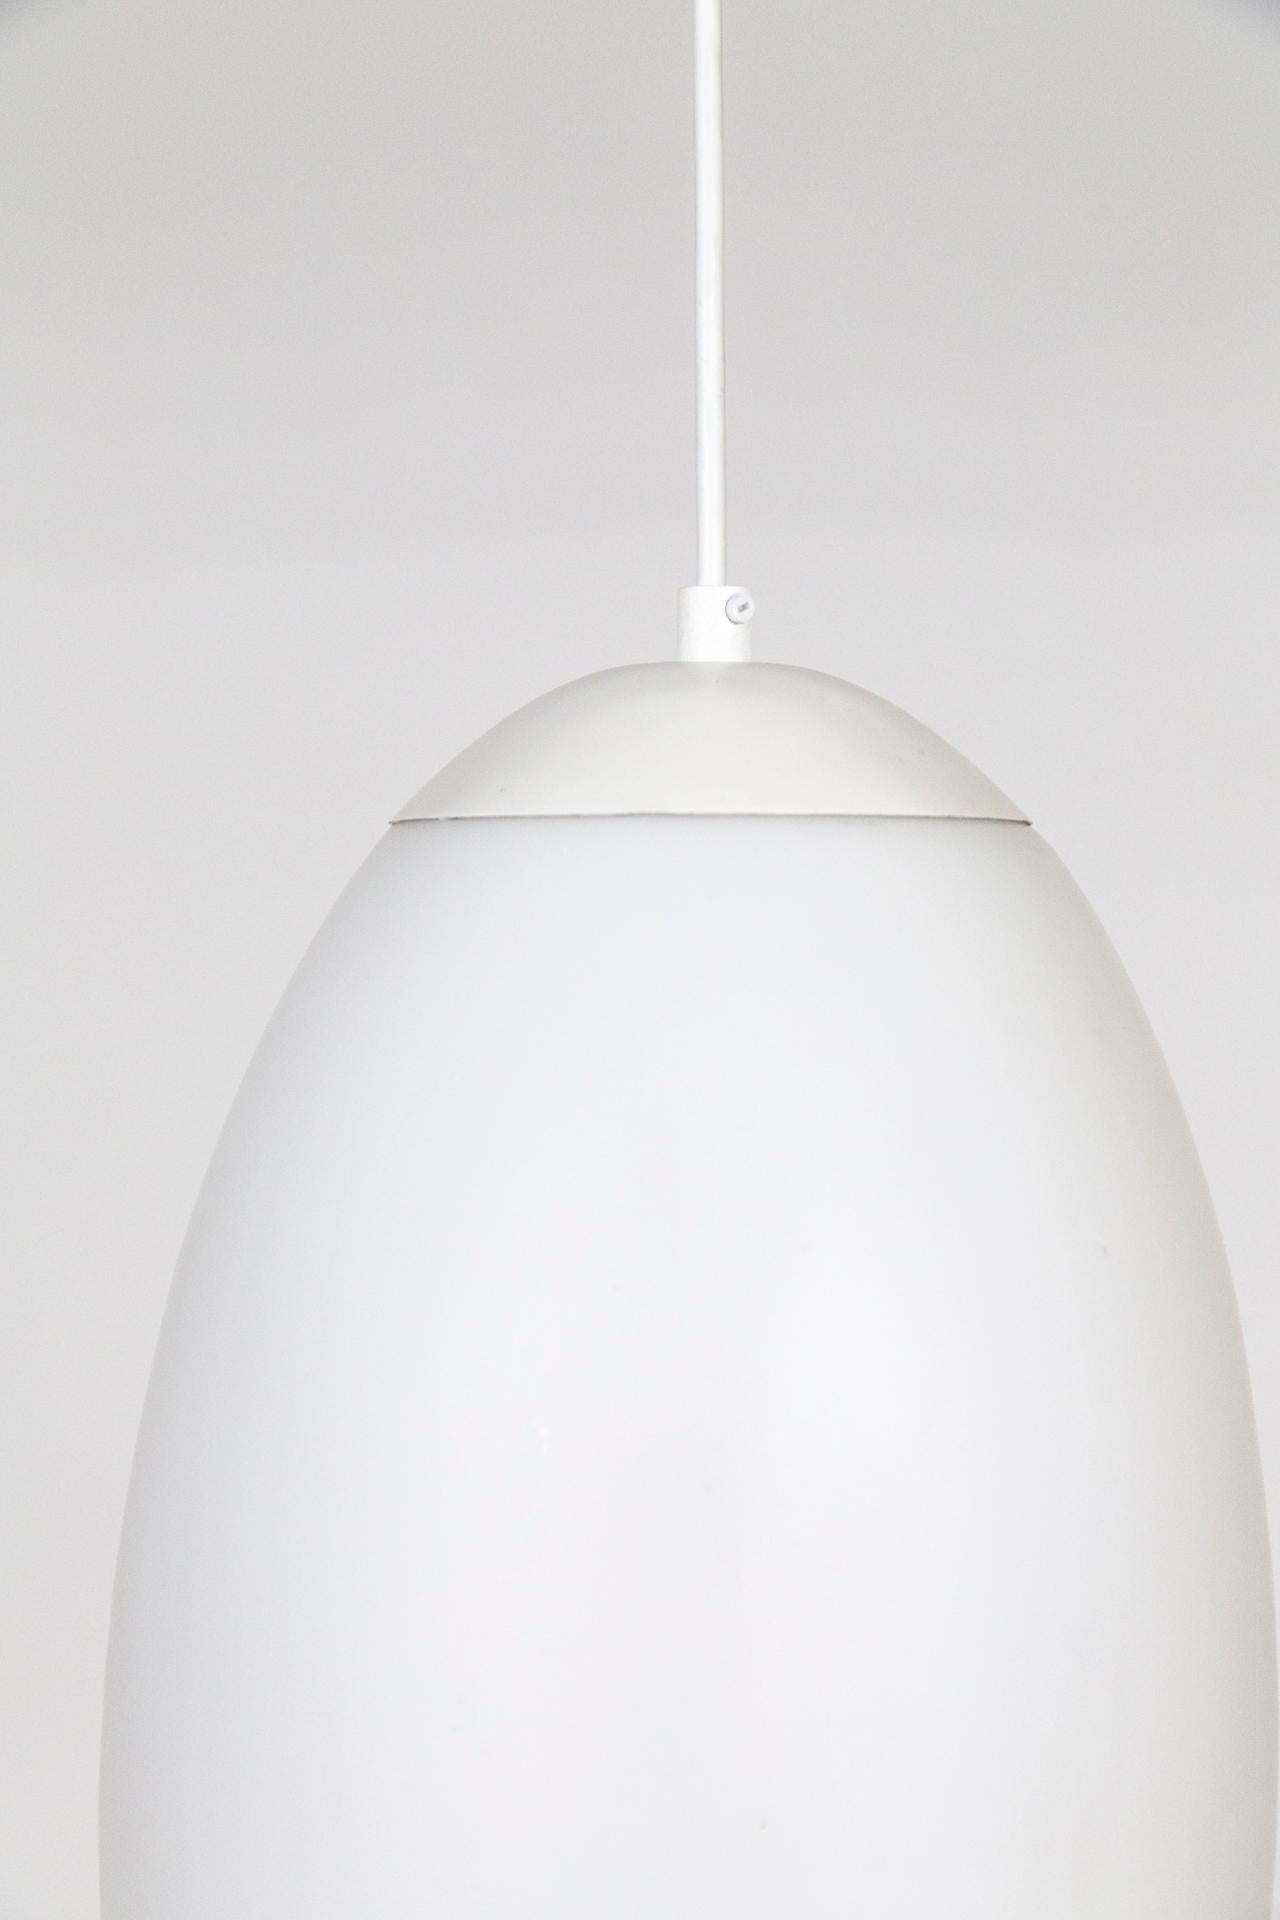 American Mid-Century Modern Prescolite Egg Shaped Milk Glass Pendant